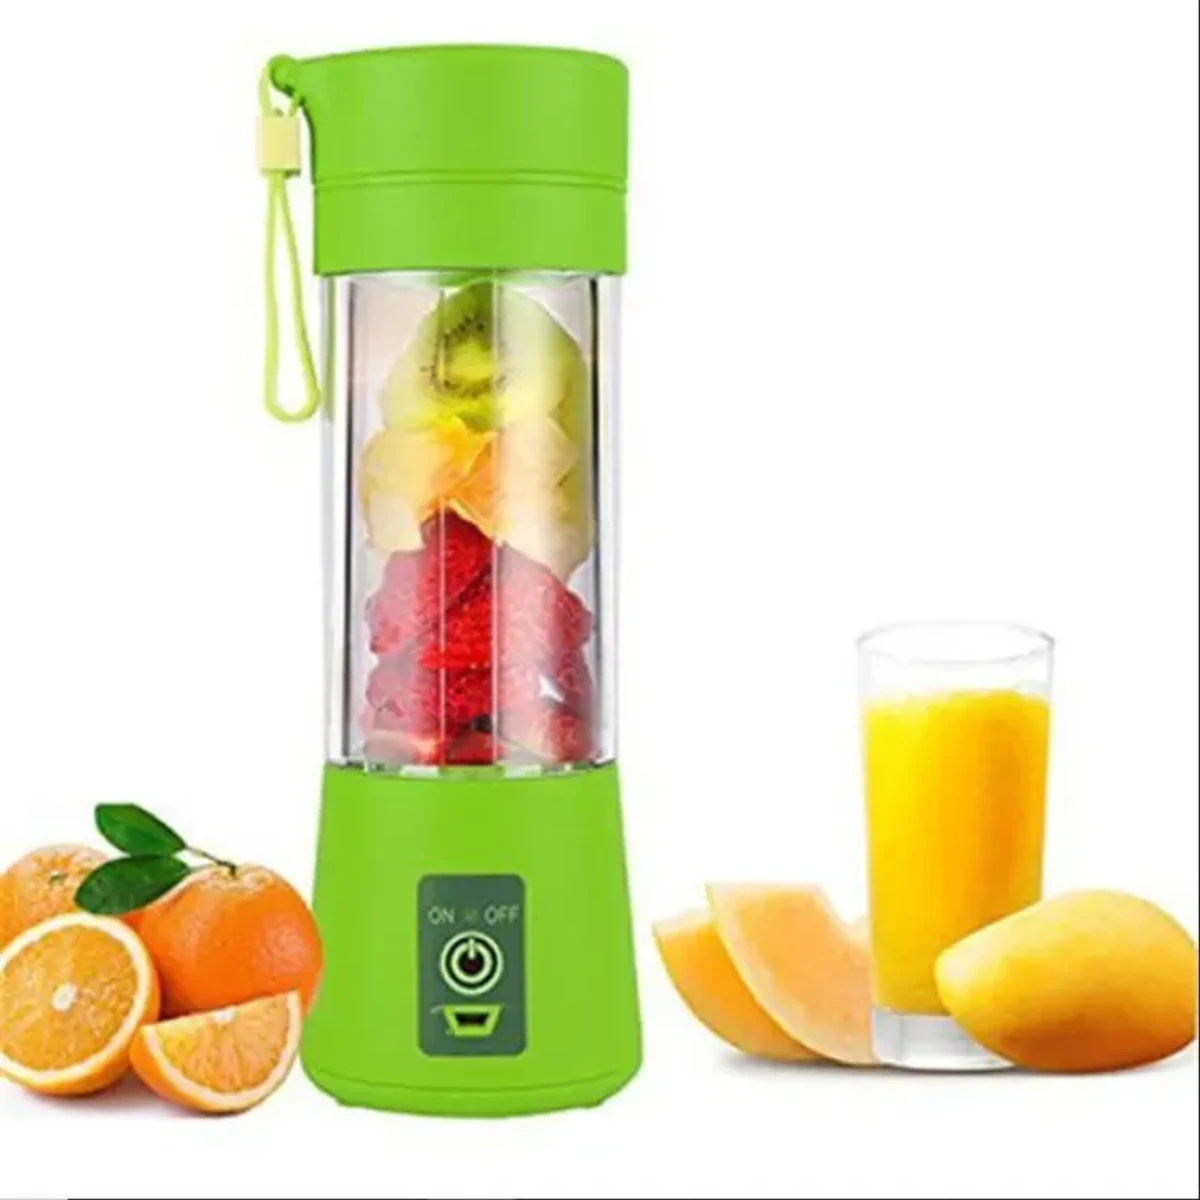 Portable Electric Blender 380ML Smart Home Fruit Juicer Machine Vegetable Juice Mixer USB Rechargeable Food Processor Cup